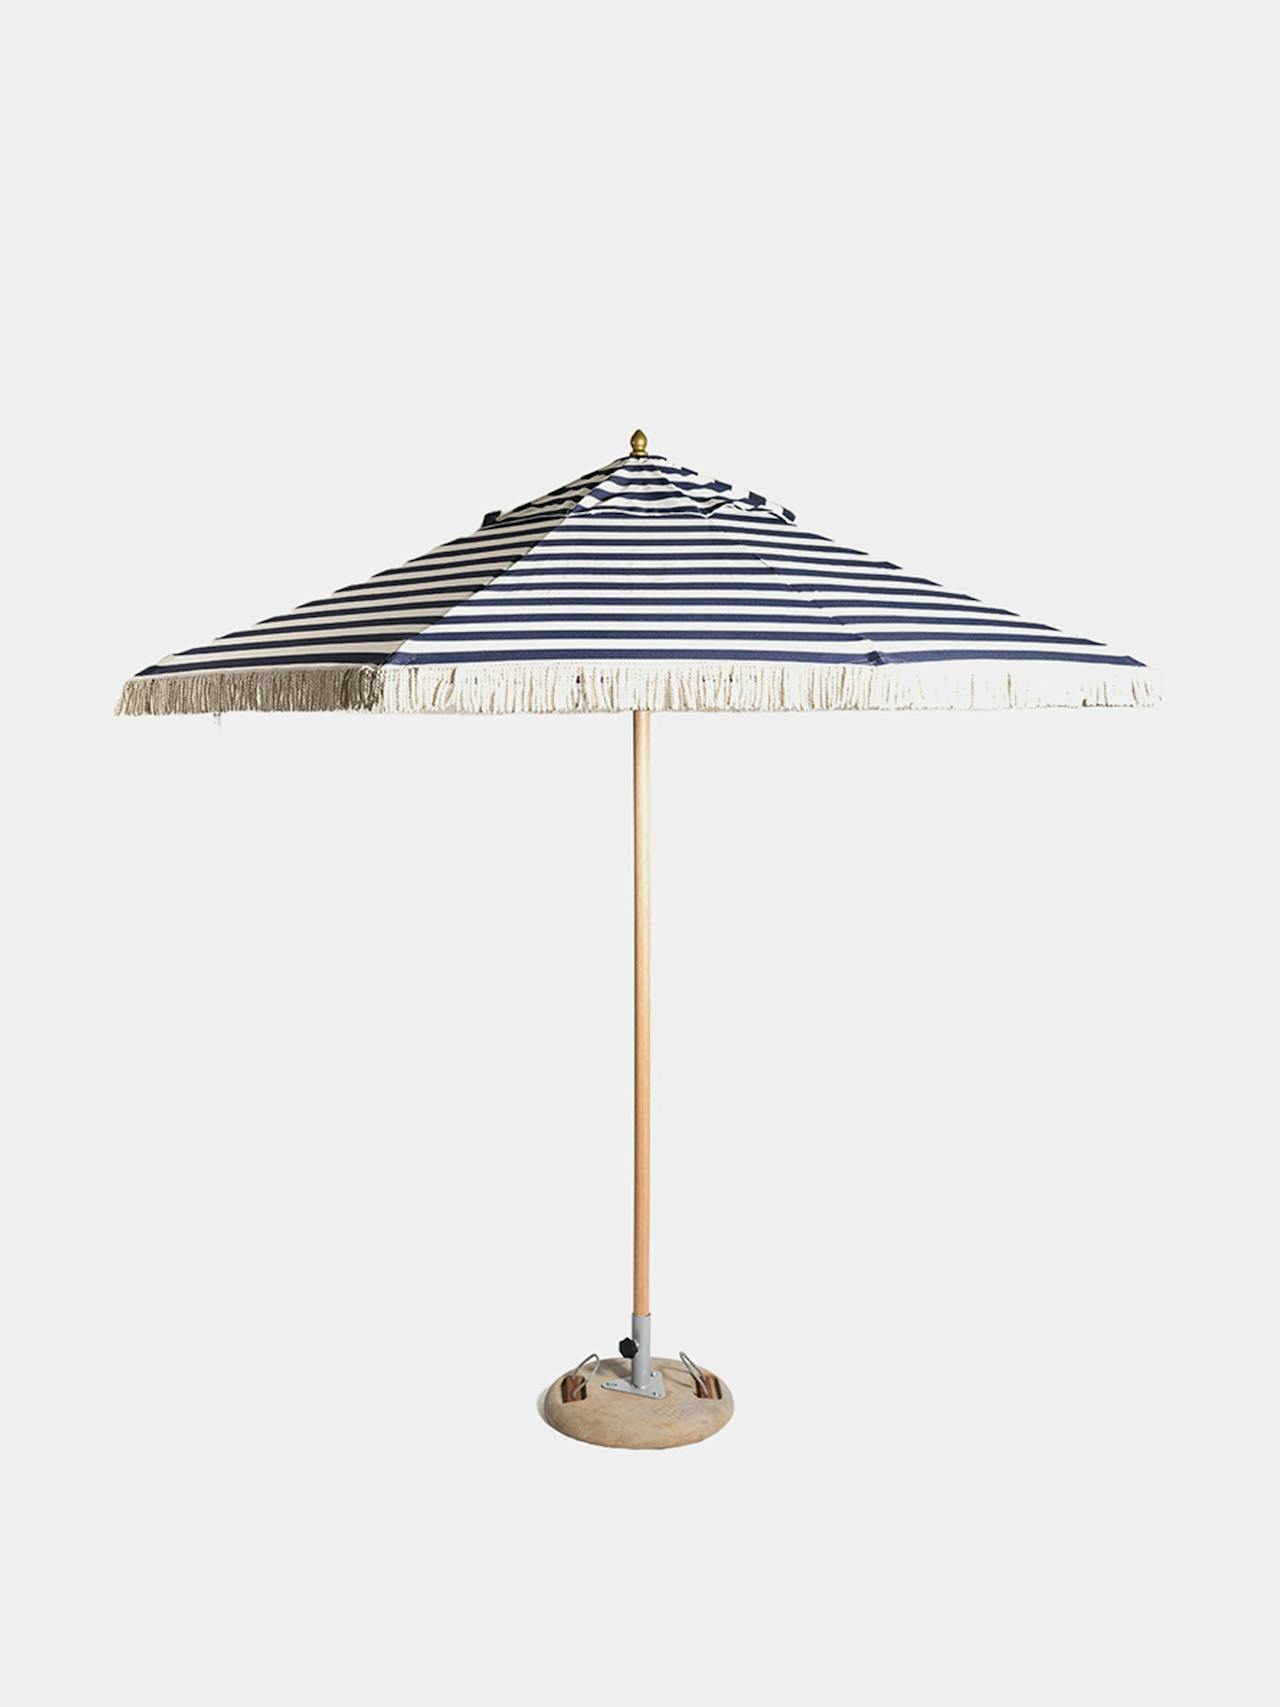 Sun parasol with tassels in navy stripe, 250cm